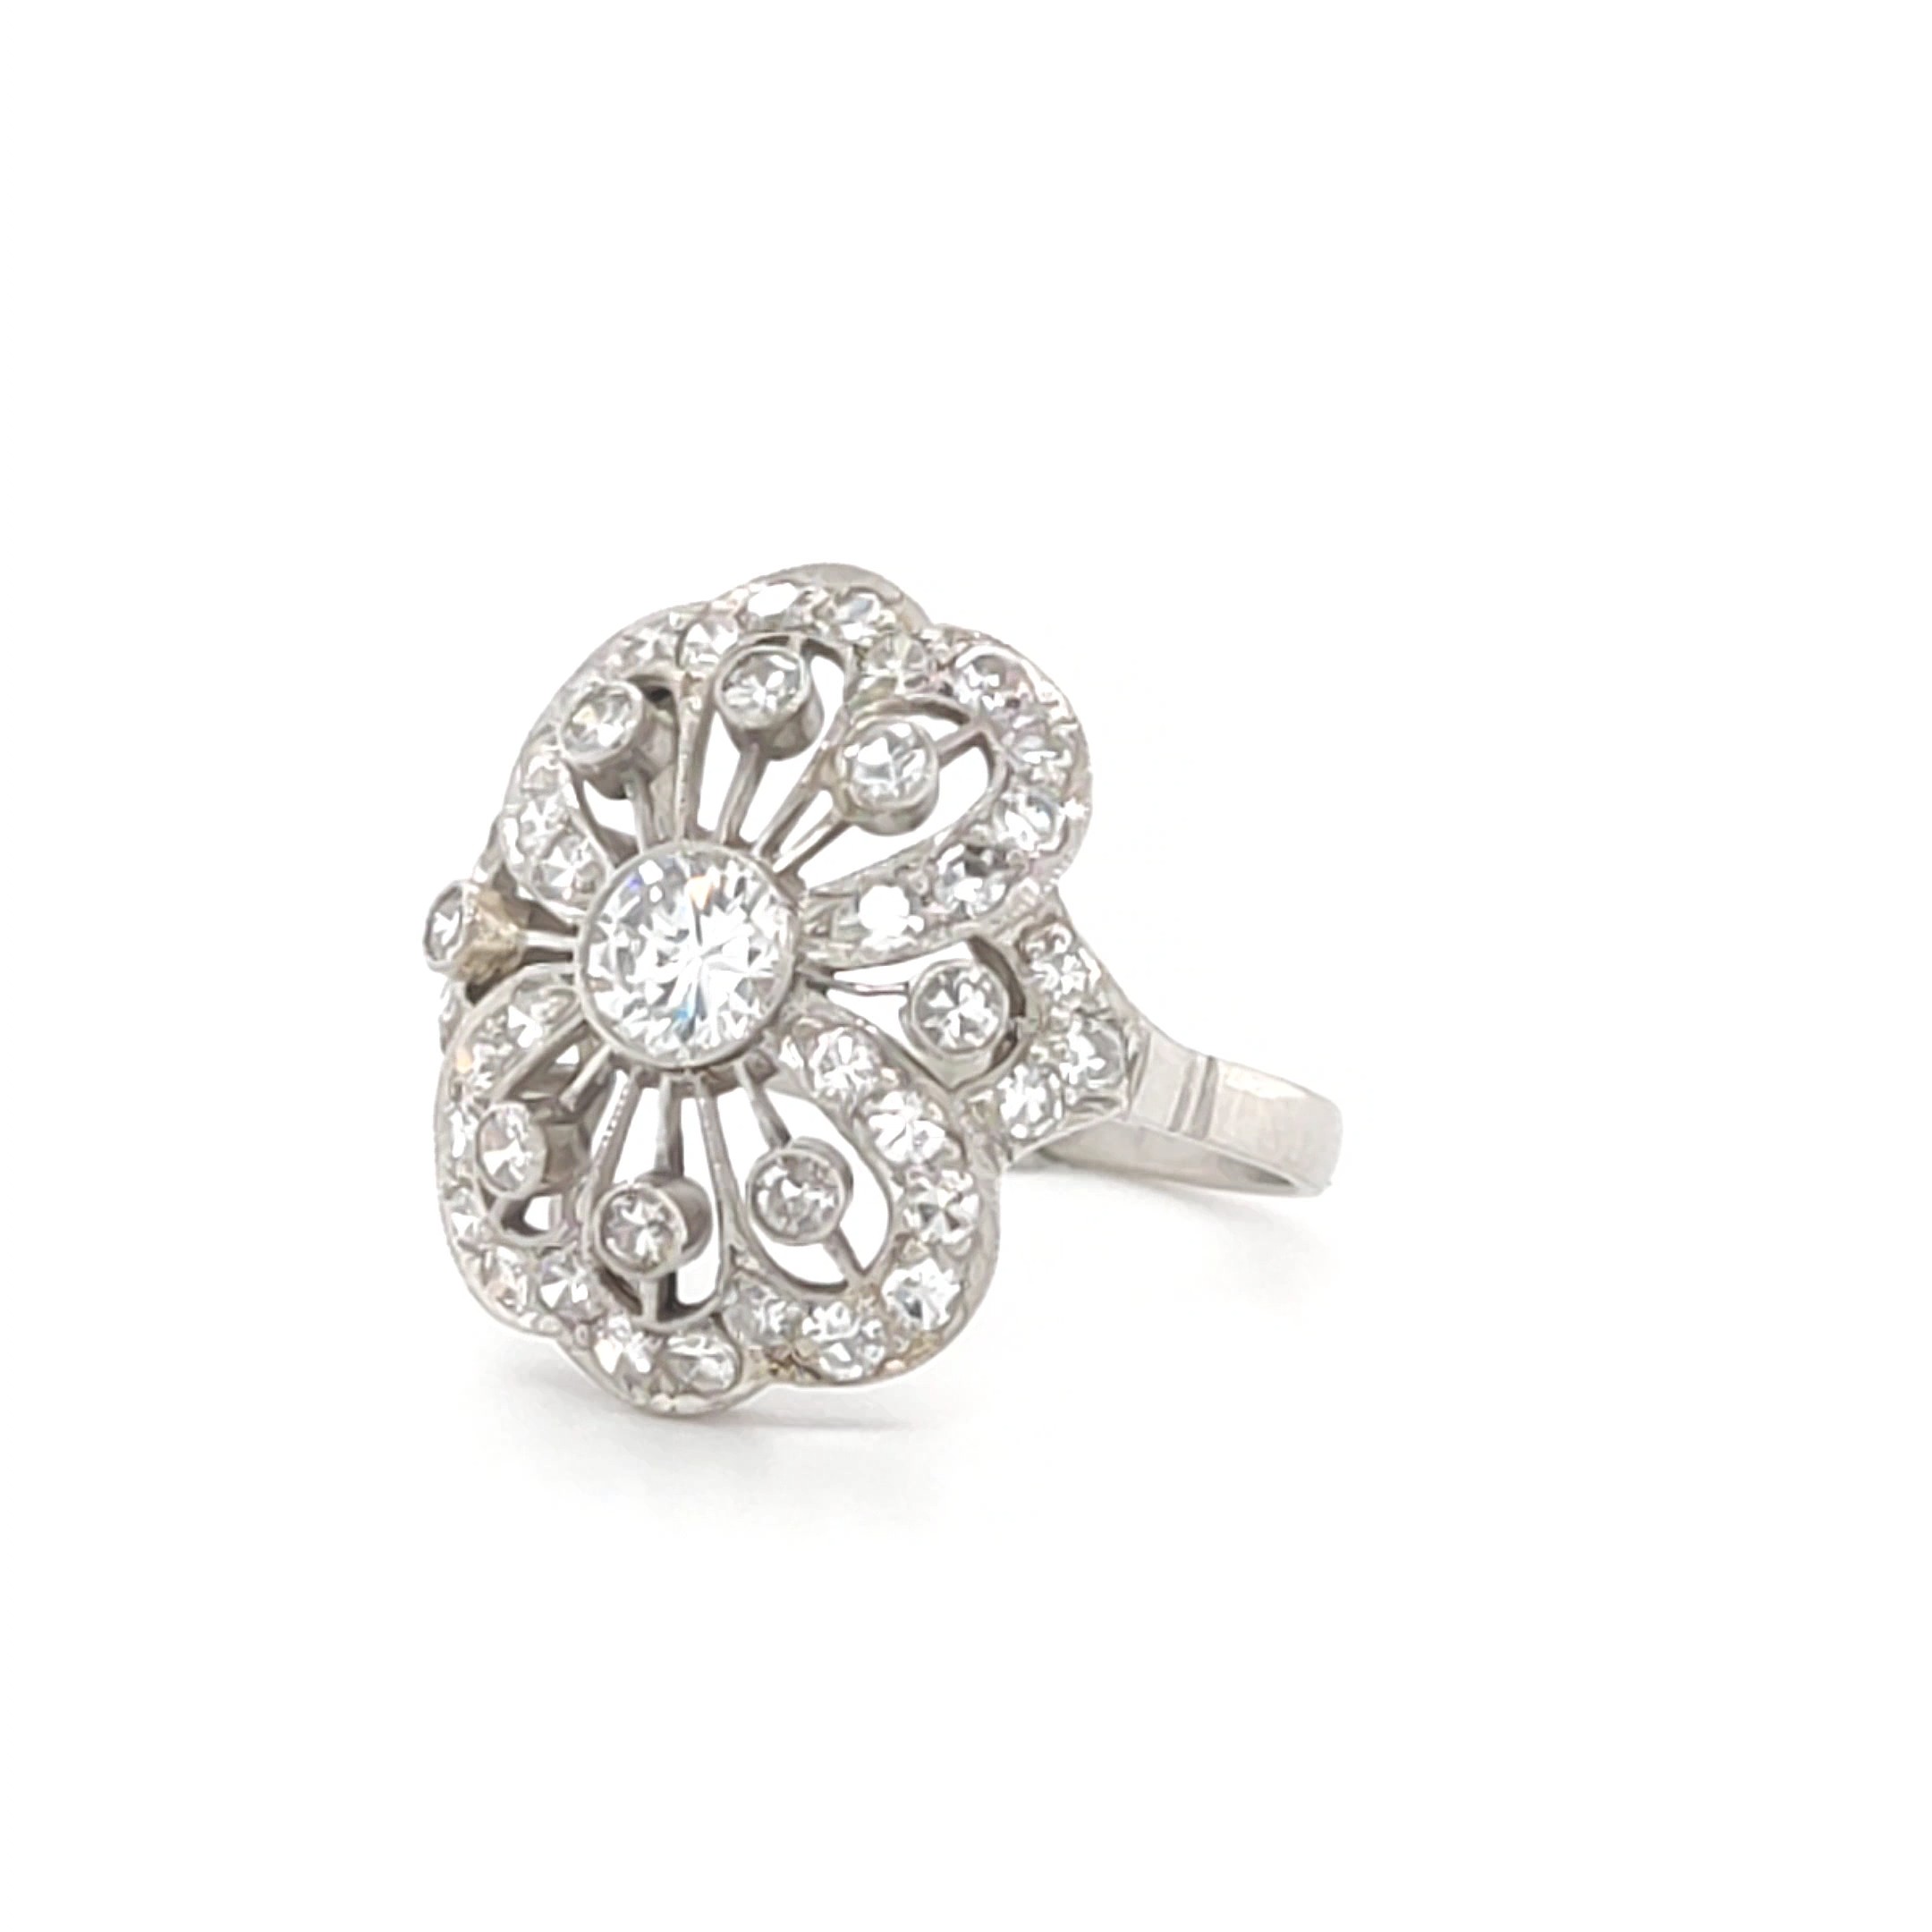 Platinum Art Deco Design Diamond Ring – Central Diamond 0.50ct Assessed – Pre-Owned